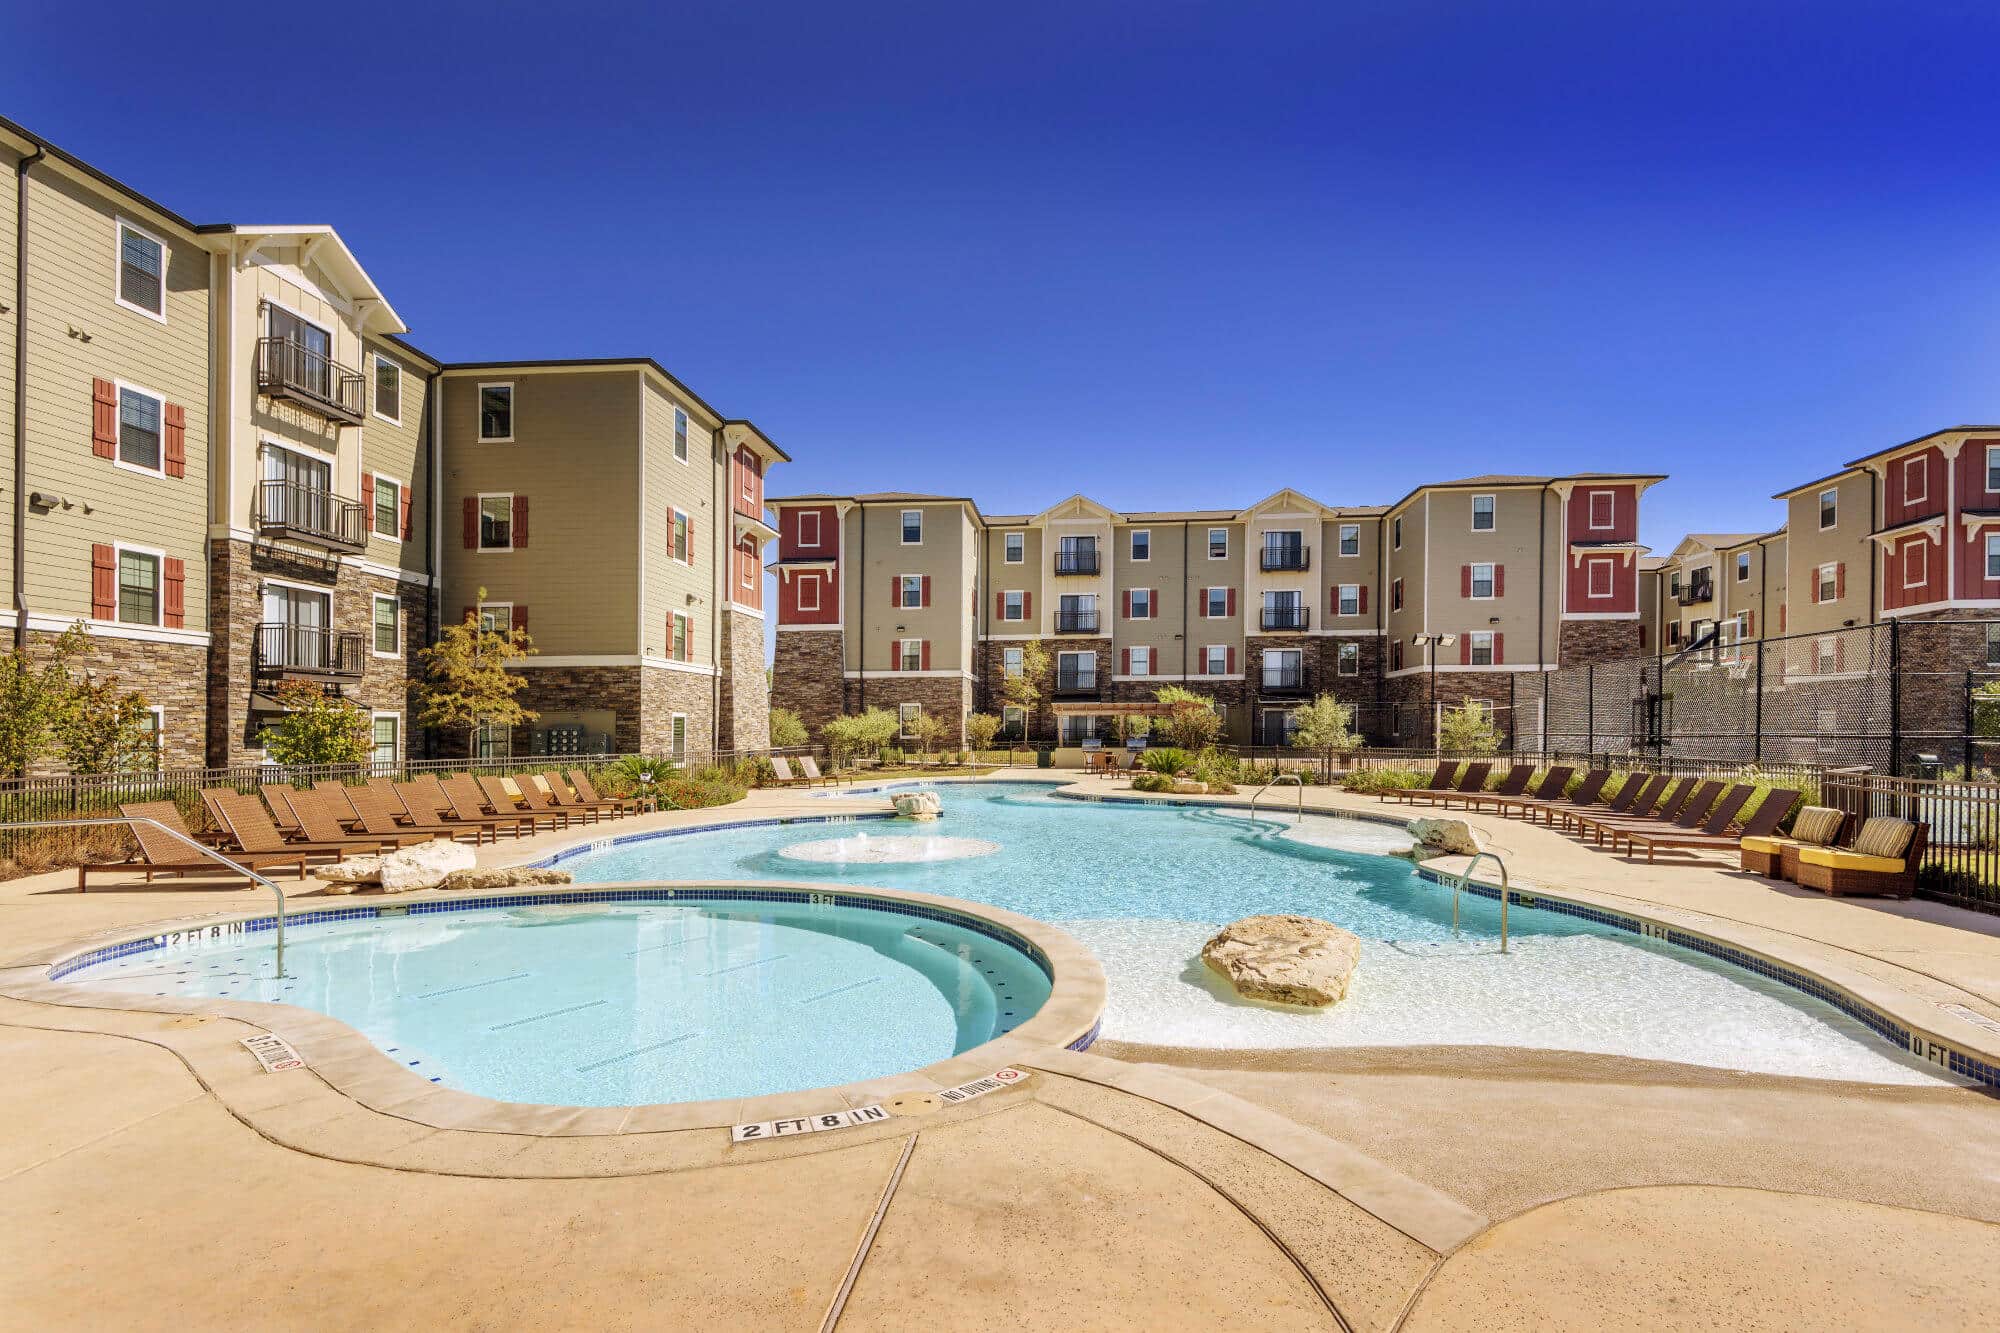 arba san marcos off campus apartments near texas state university california style pool sun deck